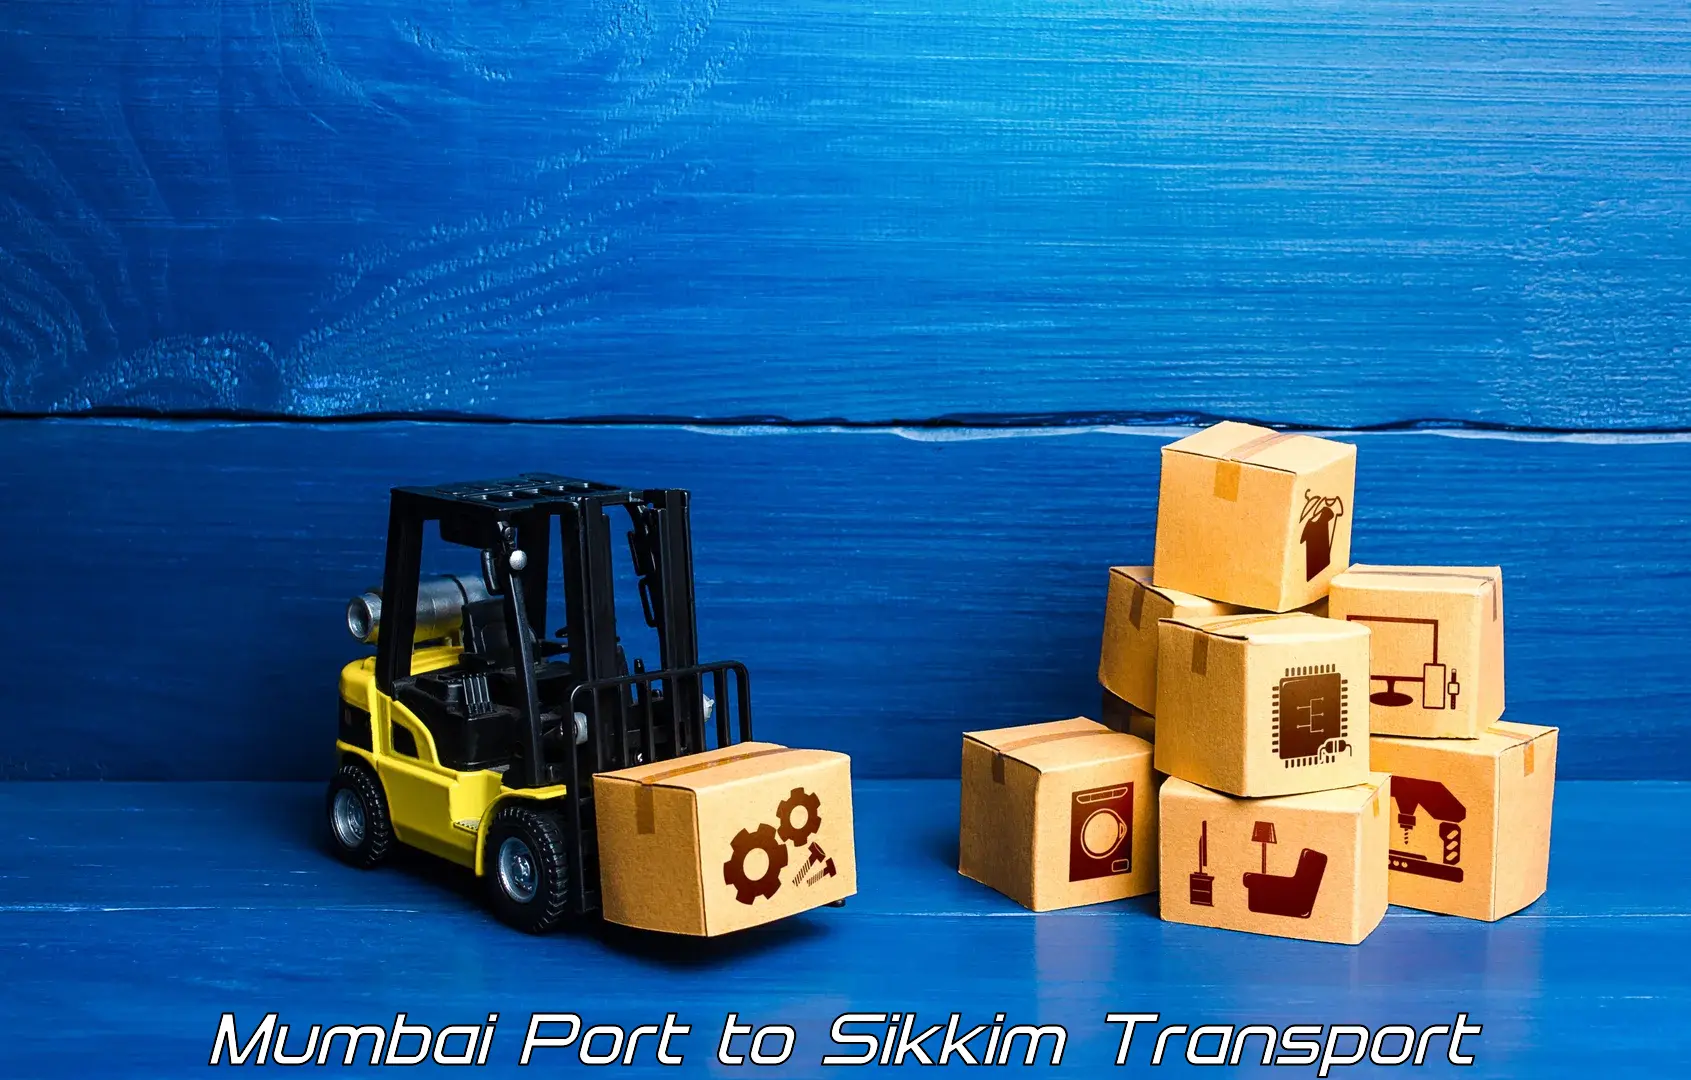 Online transport service Mumbai Port to Pelling